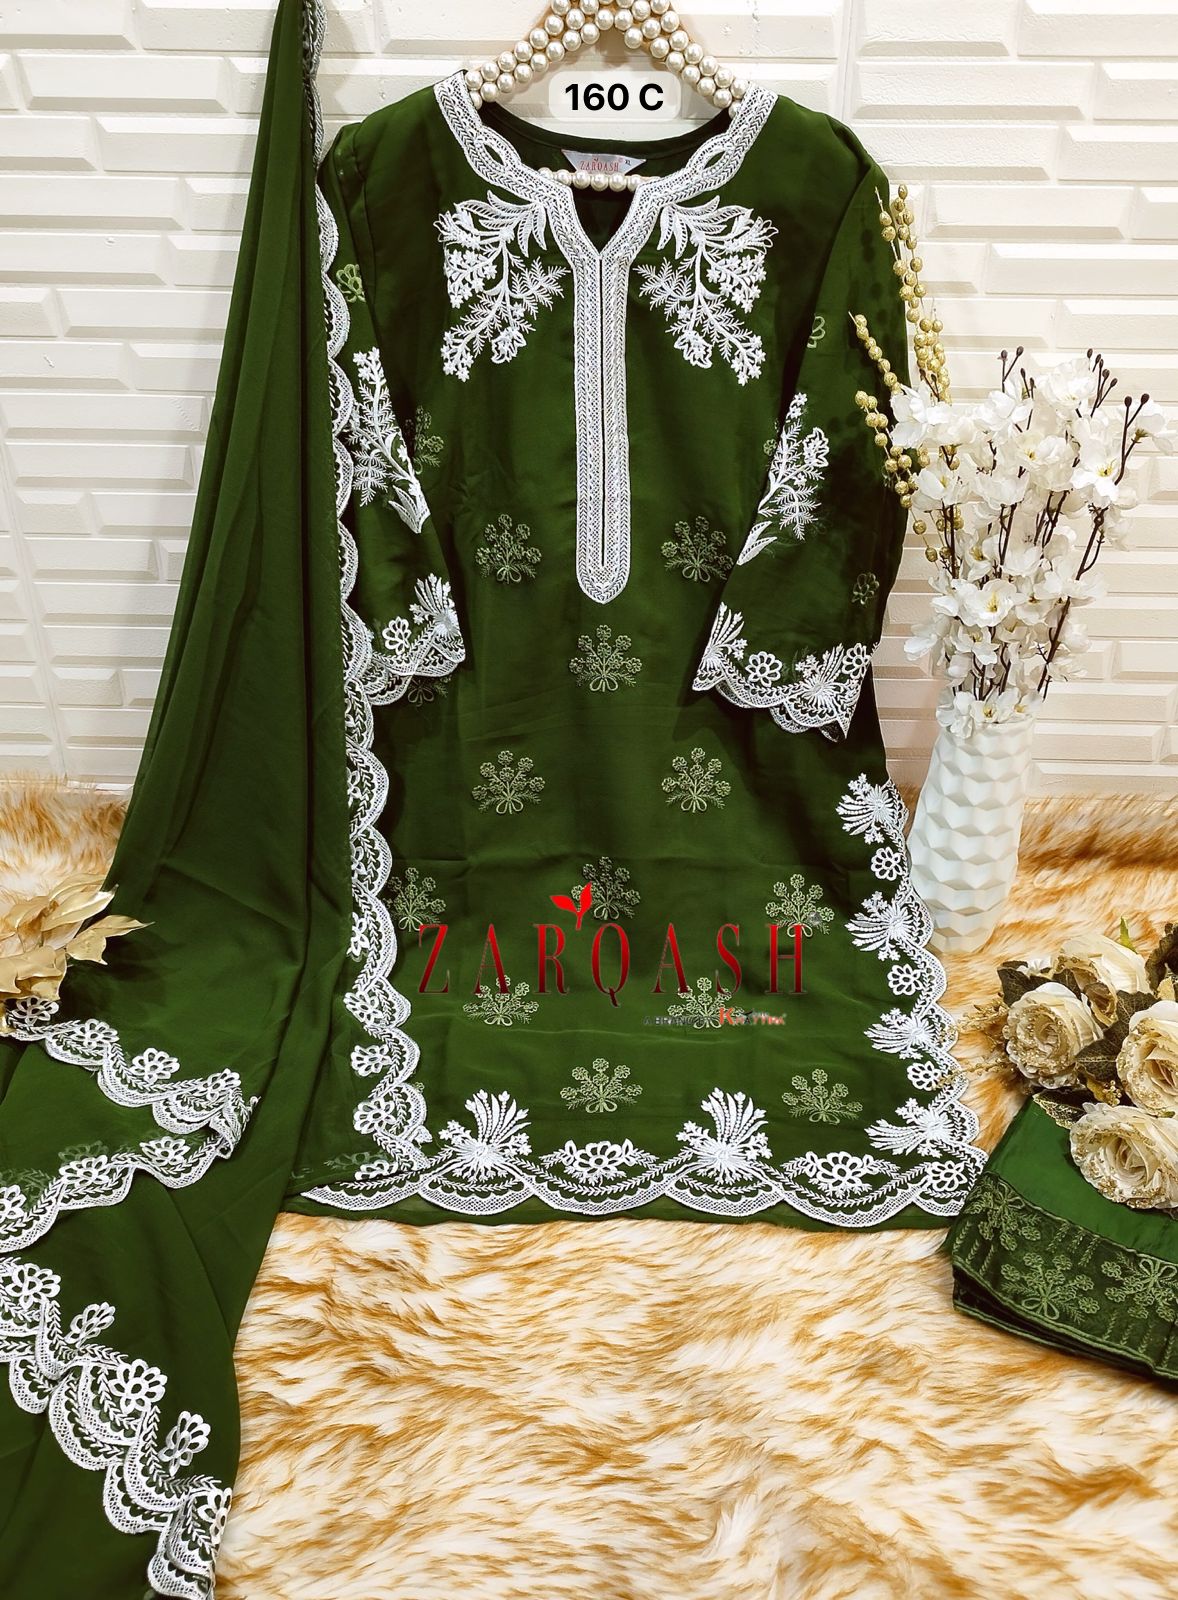 Zarqash Z 160 collection 3